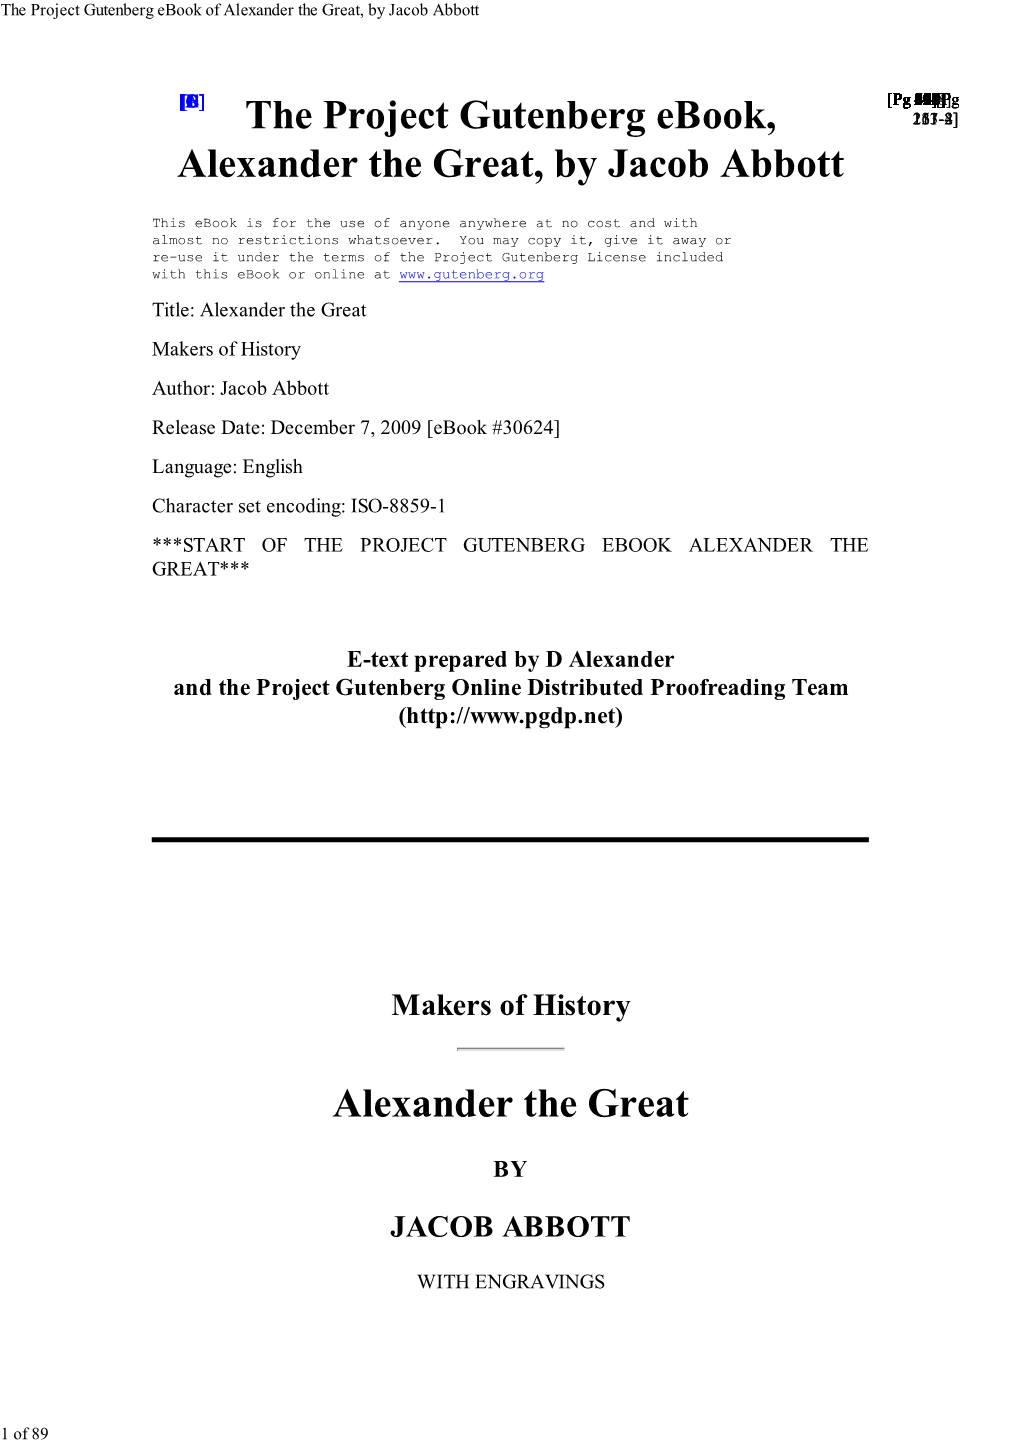 The Project Gutenberg Ebook